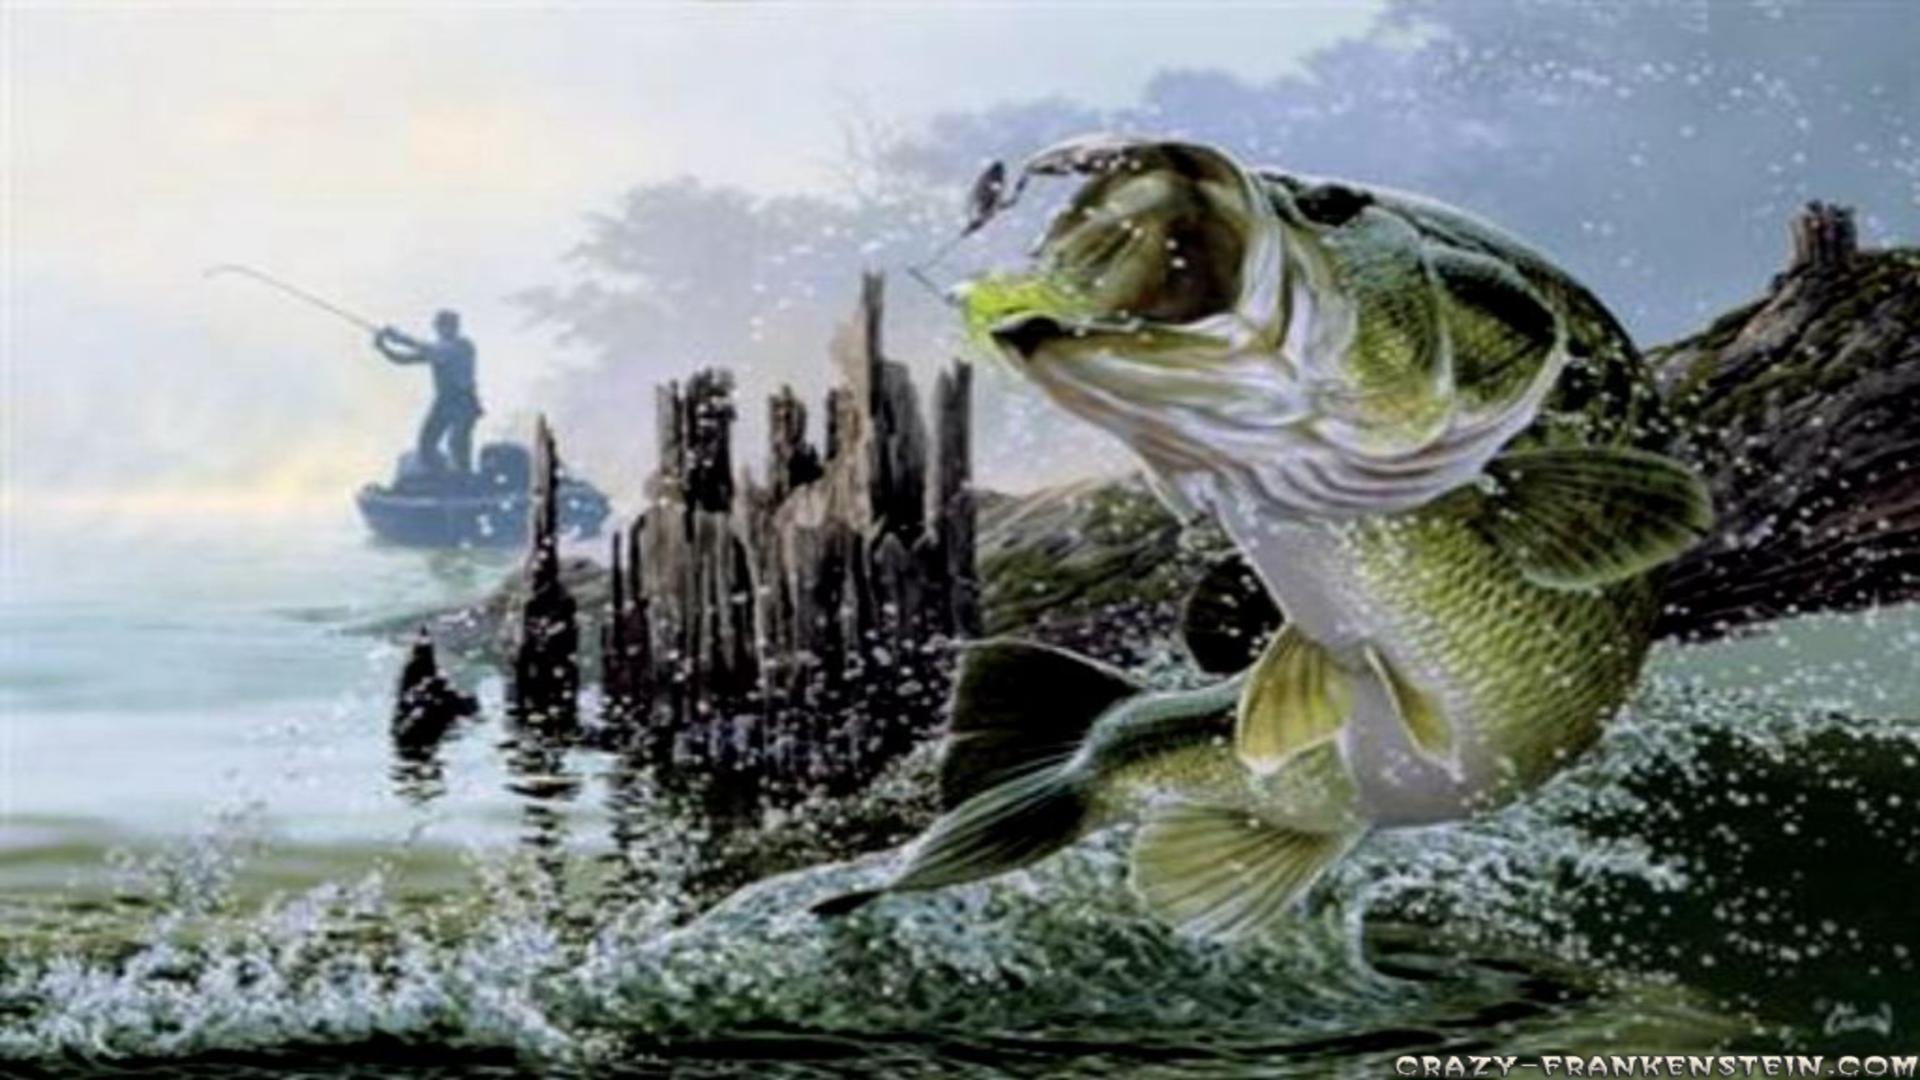 bass fishing wallpaper hd,tartaruga verde,tartaruga,tartaruga di mare,rettile,pesce